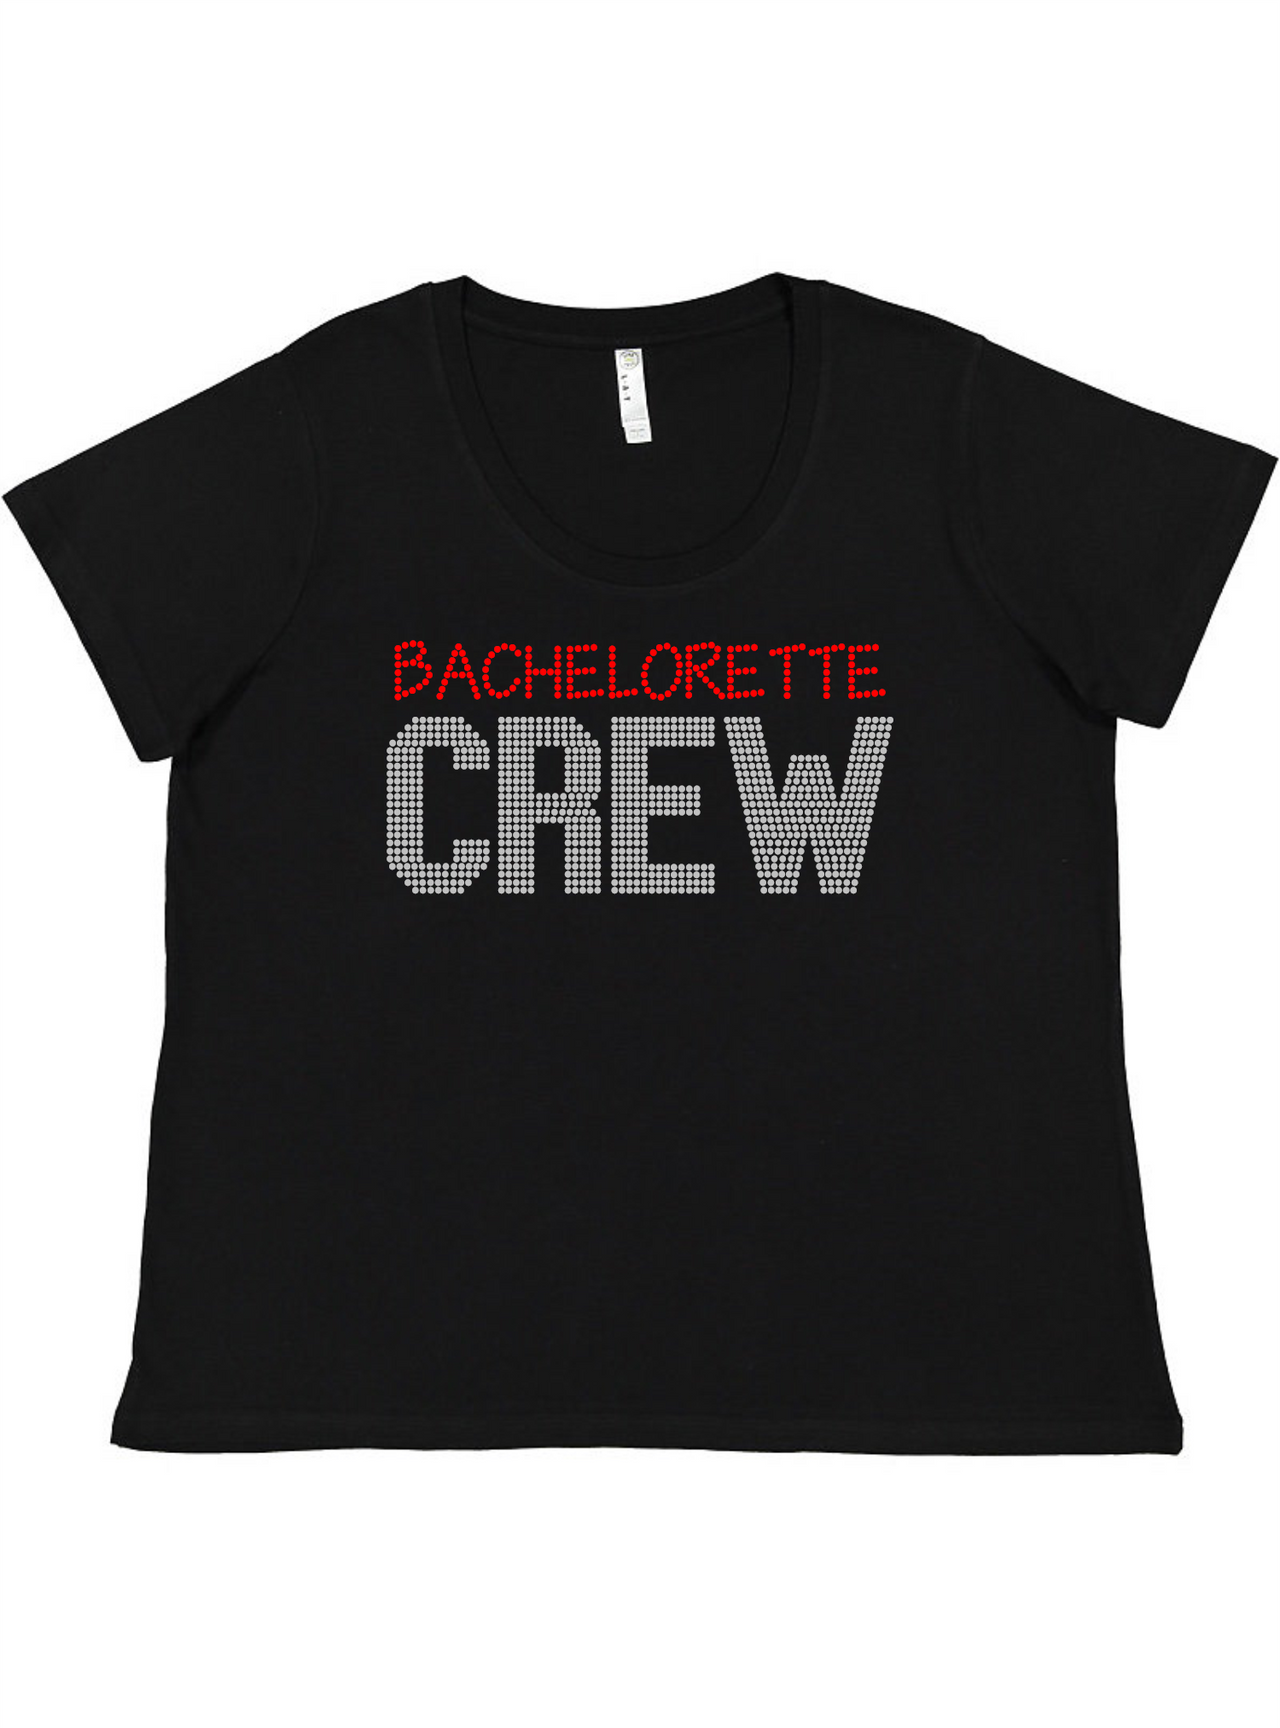 Bachelorette Crew Ladies Tee Ladies Shirt by Akron Pride Custom Tees | Akron Pride Custom Tees